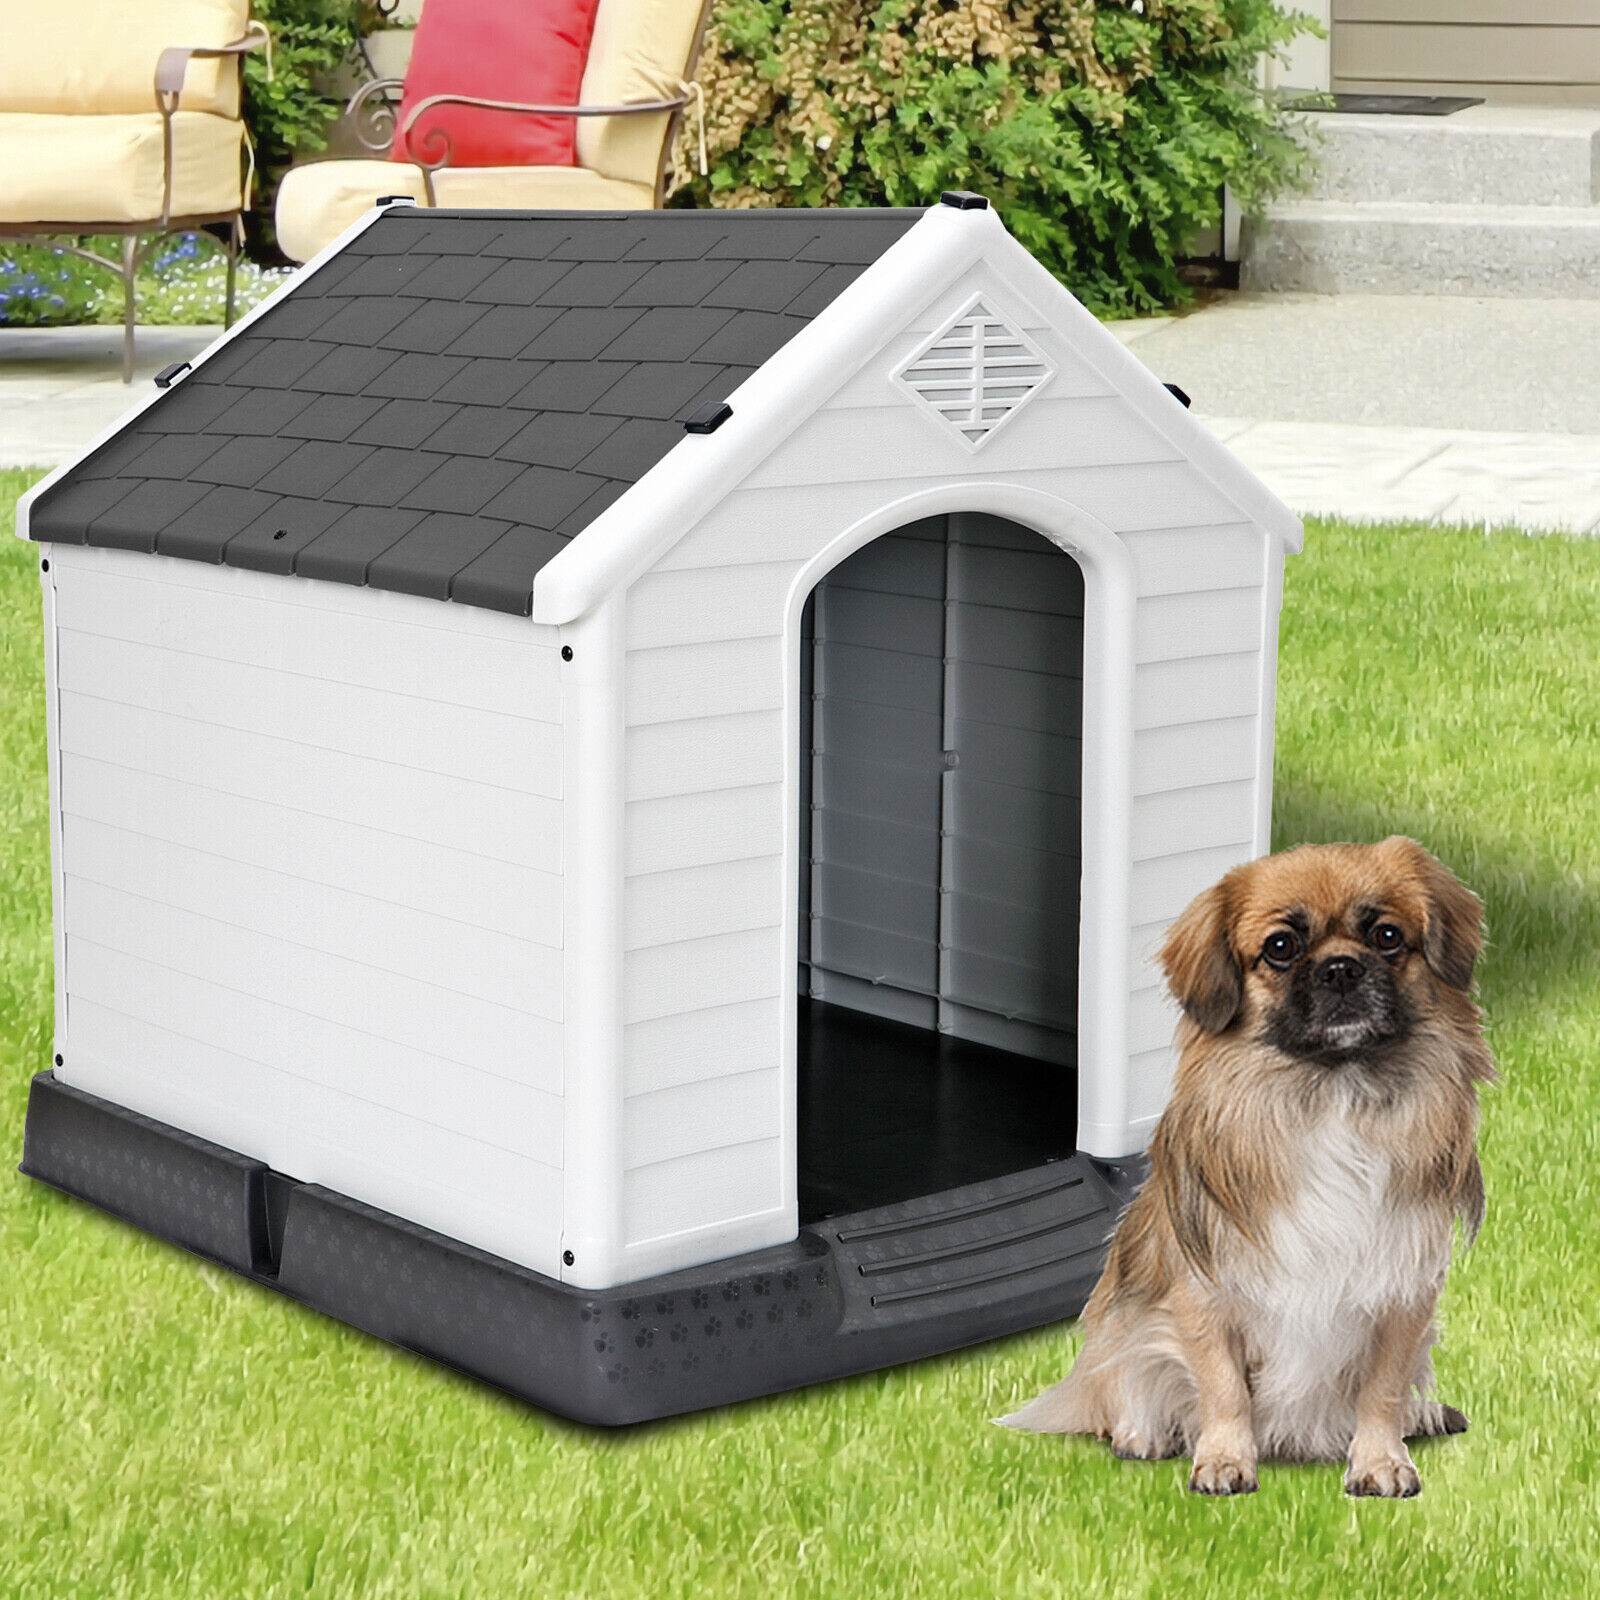 thinkstar Large Indoor Outdoor Dog House Waterproof Solid Plastic Frame Waterproof, Gray